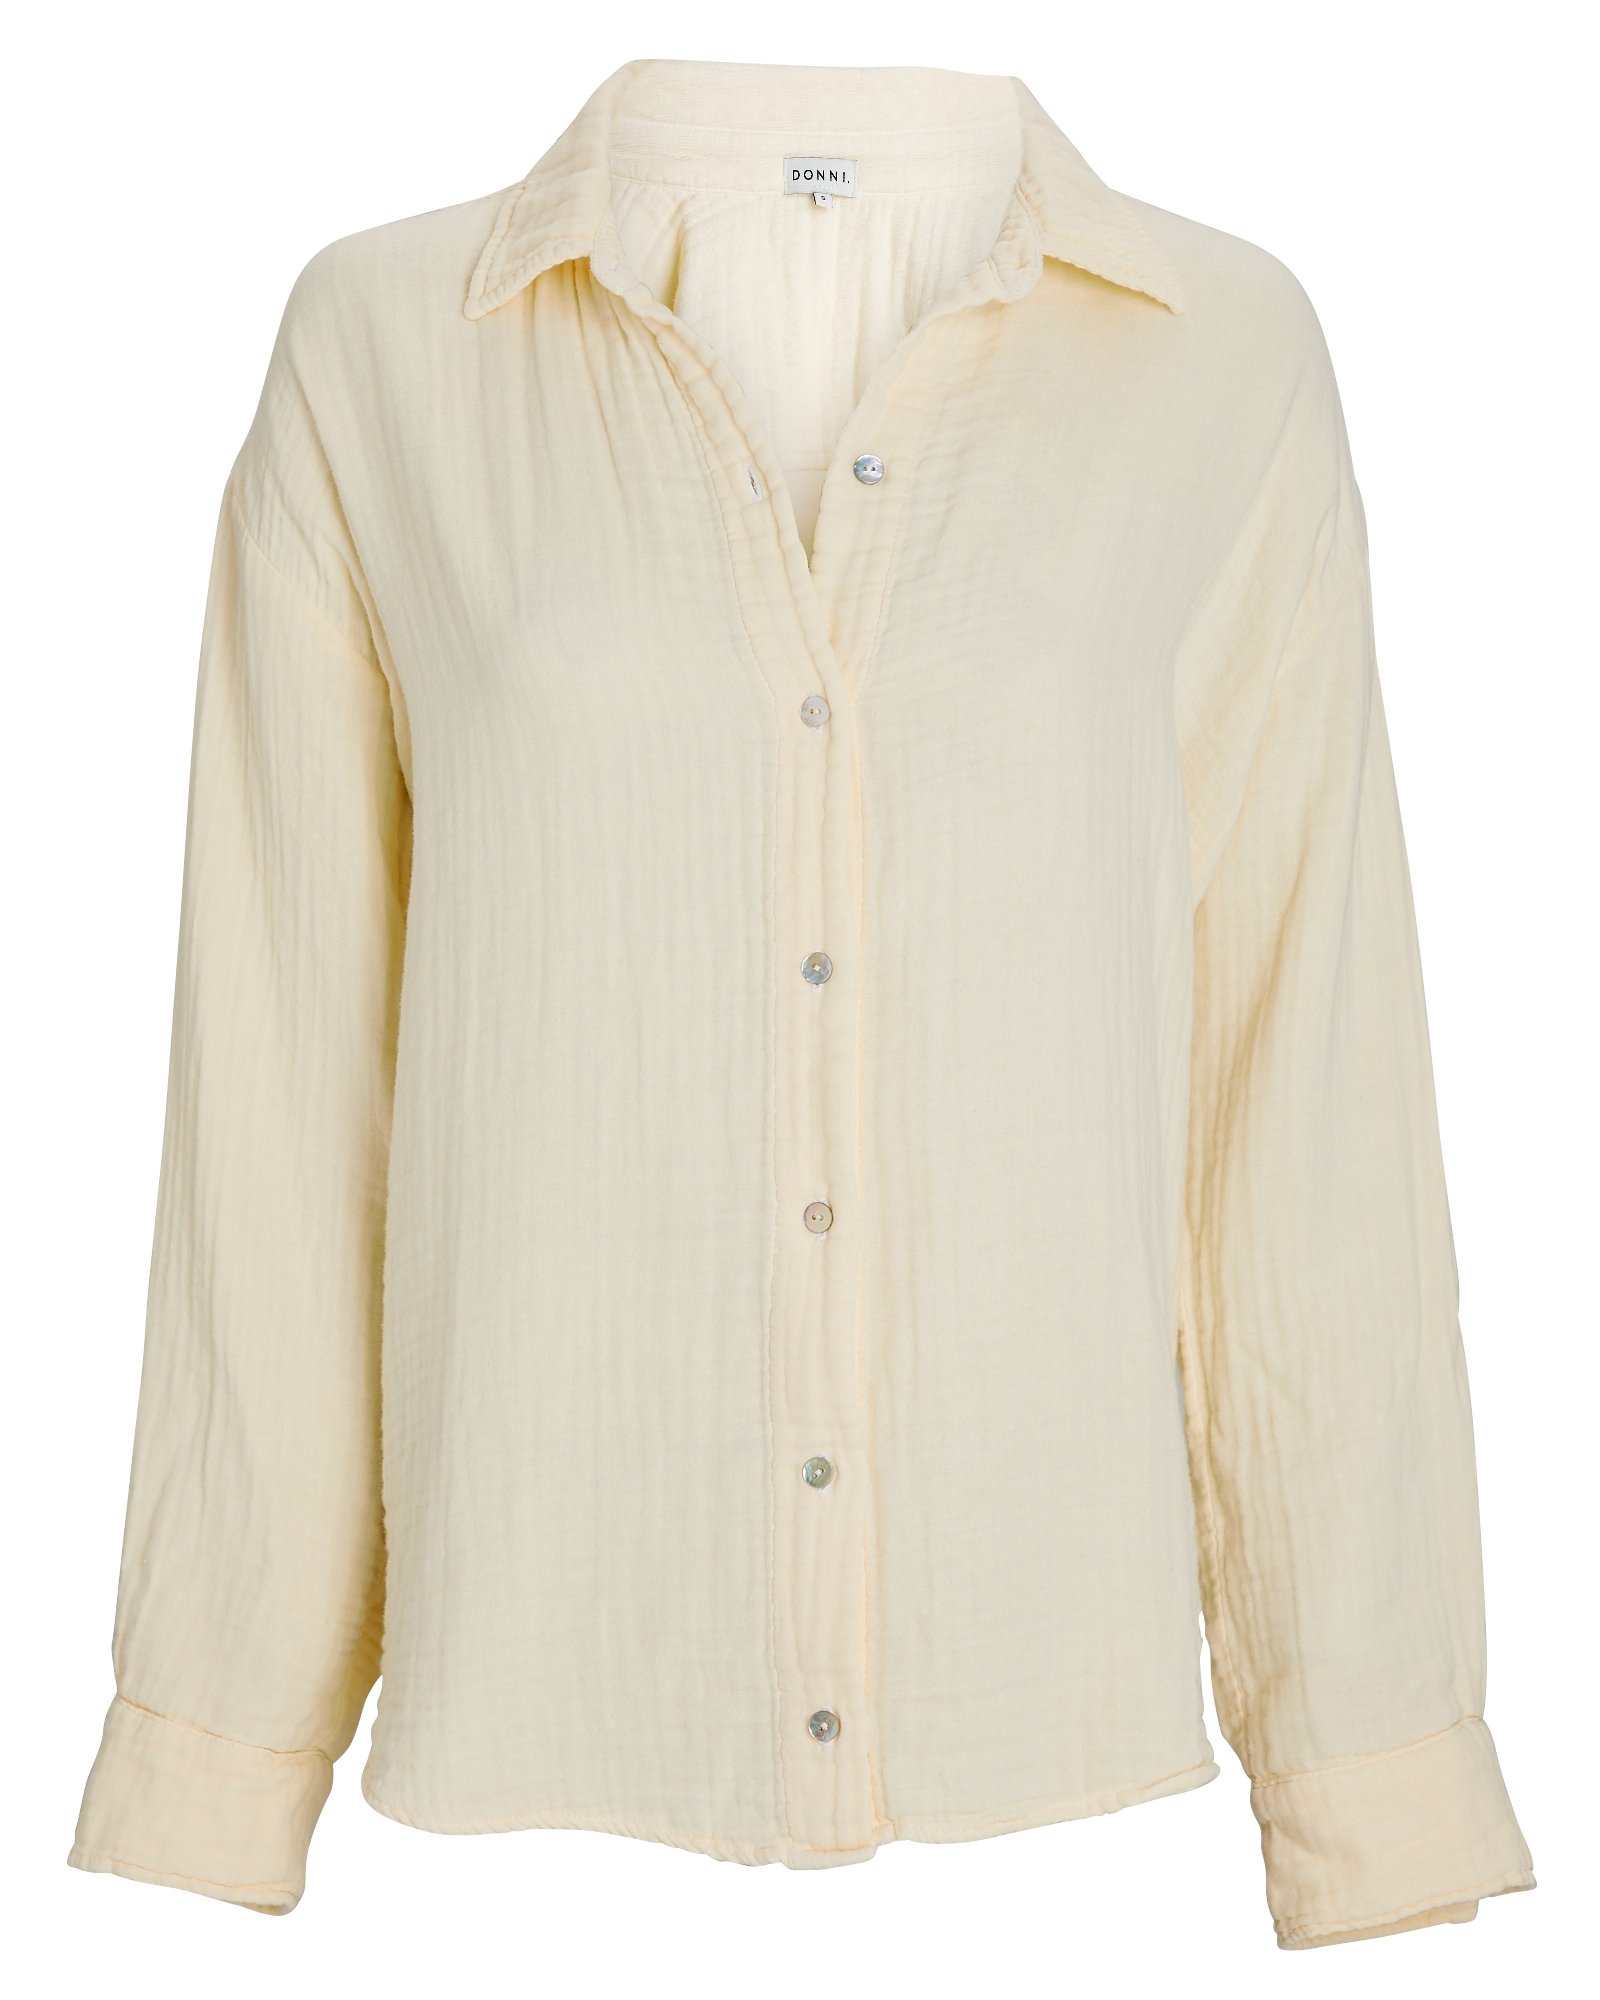 DONNI. Gauze Button-Down Shirt | INTERMIX®